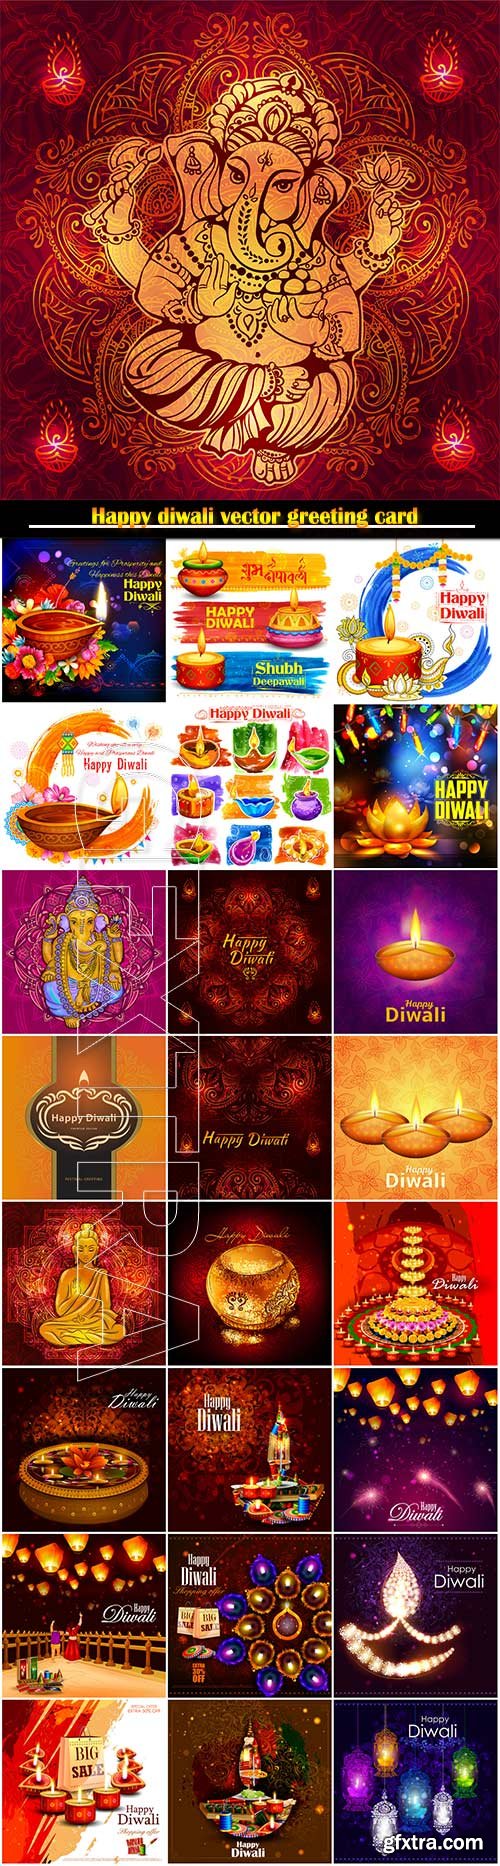 Happy diwali vector greeting card # 2